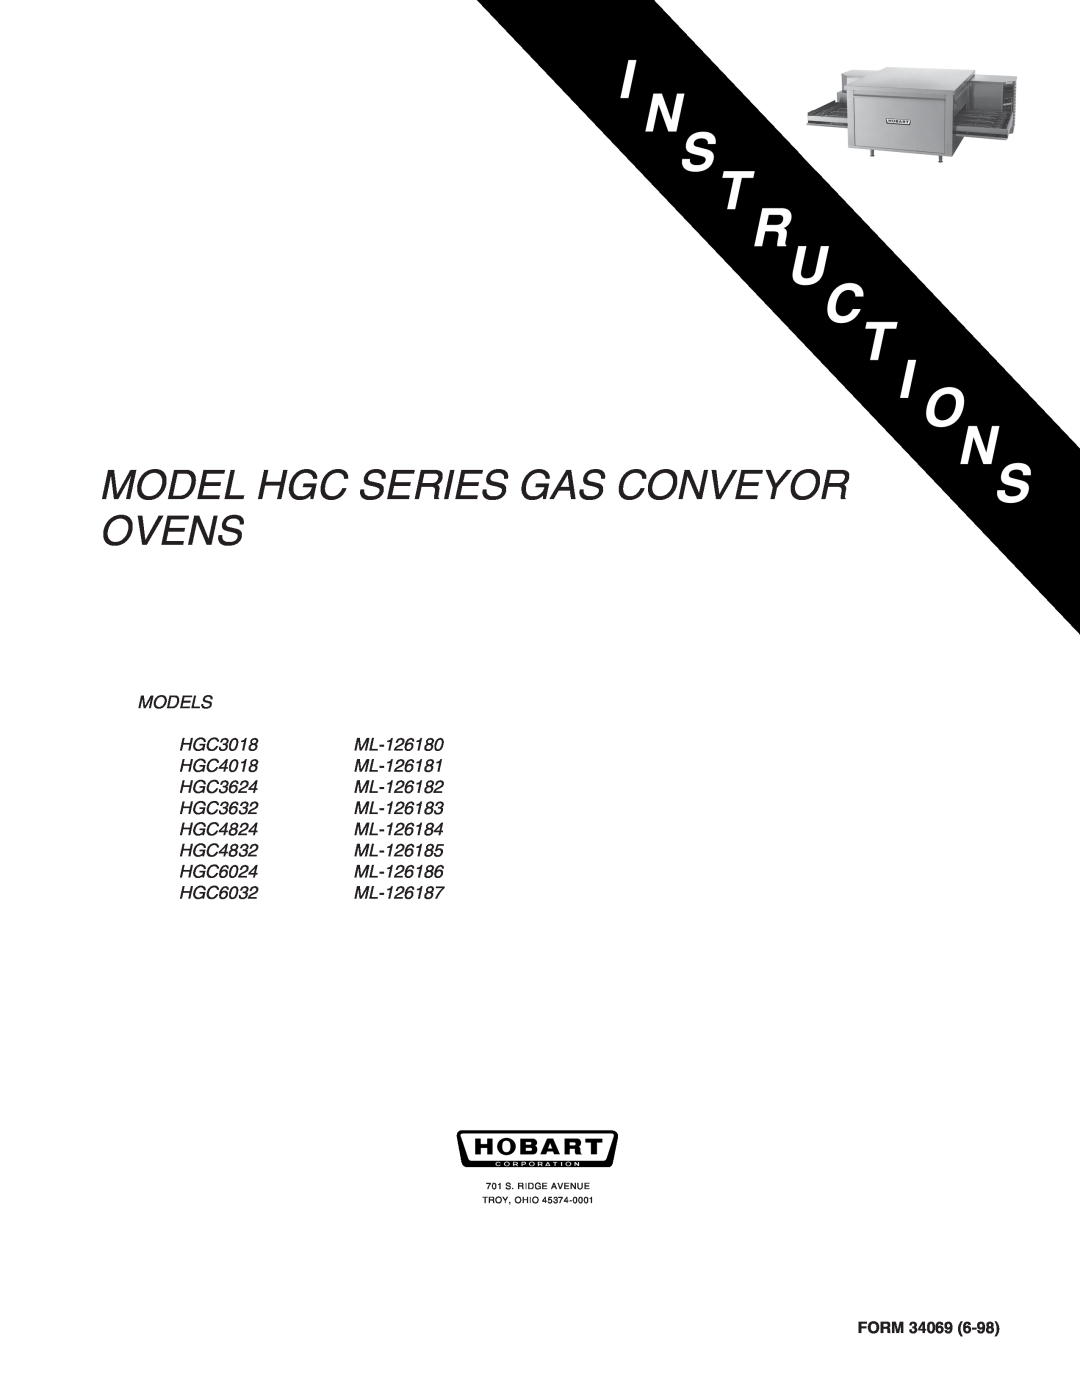 Hobart HGC4832, HGC6024, HGC6032 manual Model Hgc Series Gas Conveyor Ovens, MODELS HGC3018ML-126180 HGC4018ML-126181, Form 